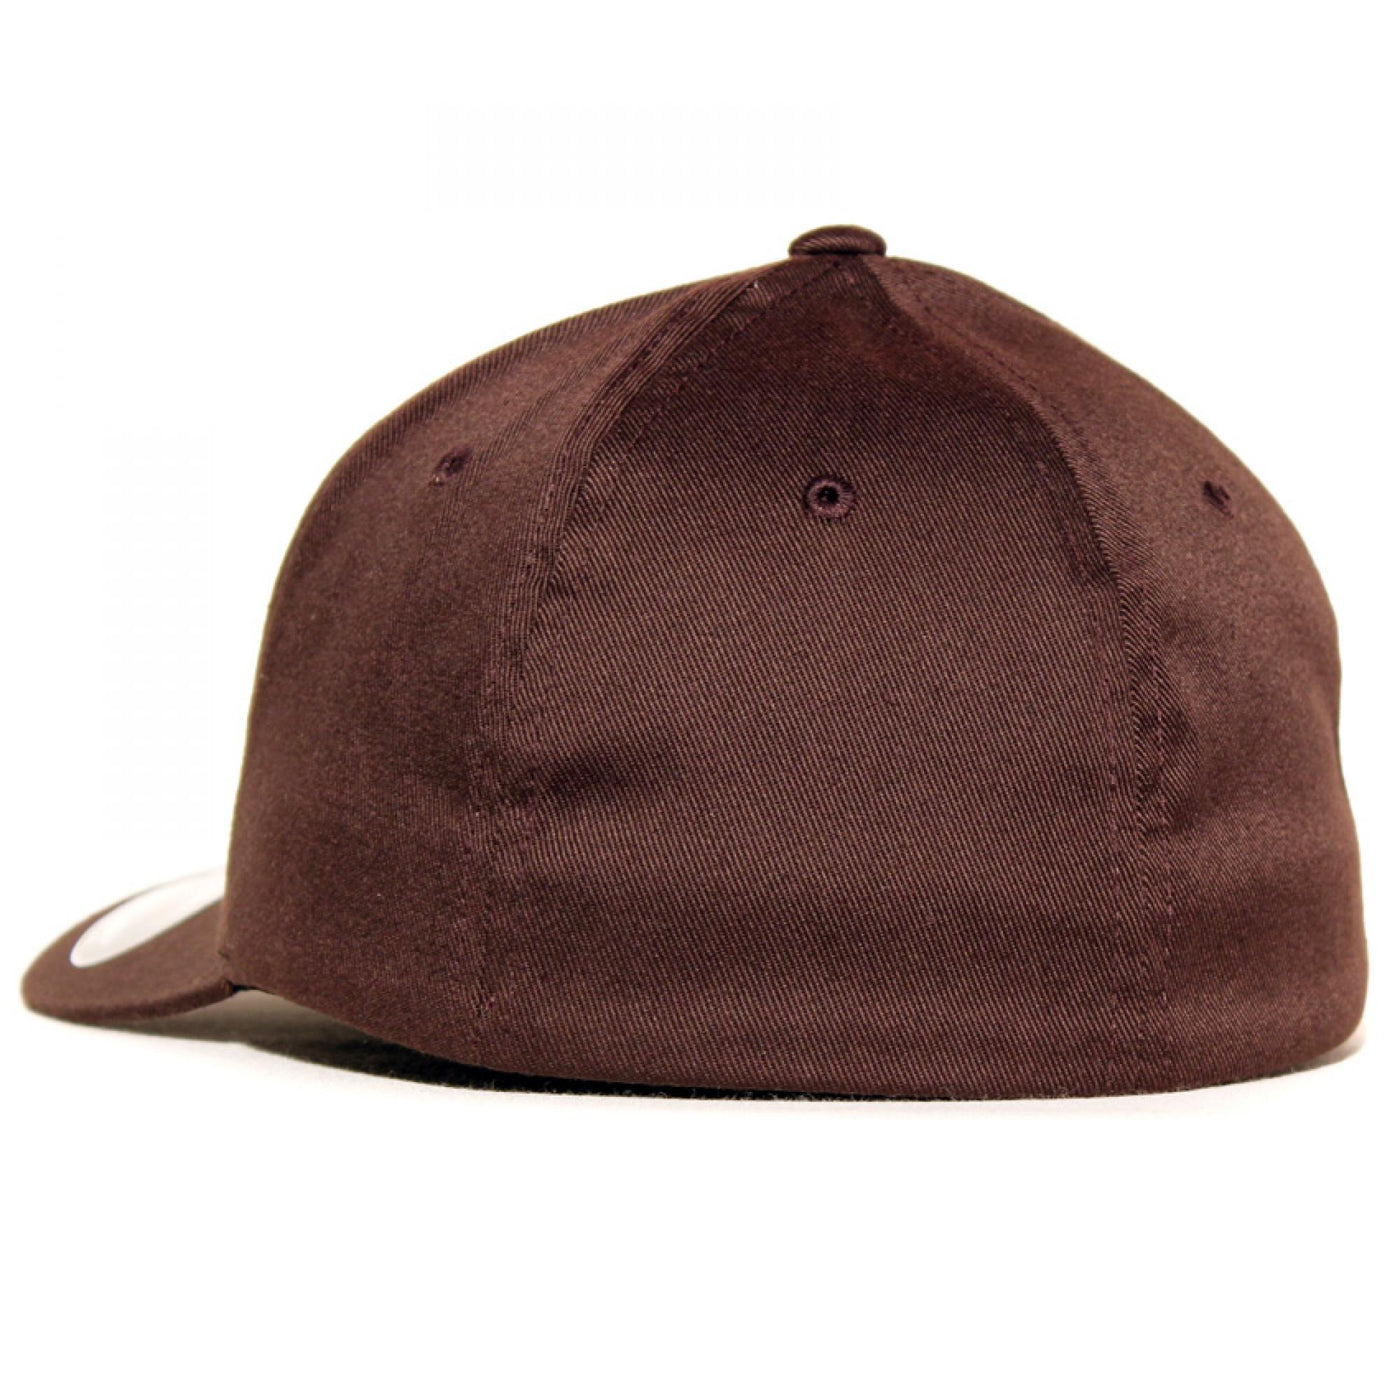 Flexfit cap brown - Shop-Tetuan